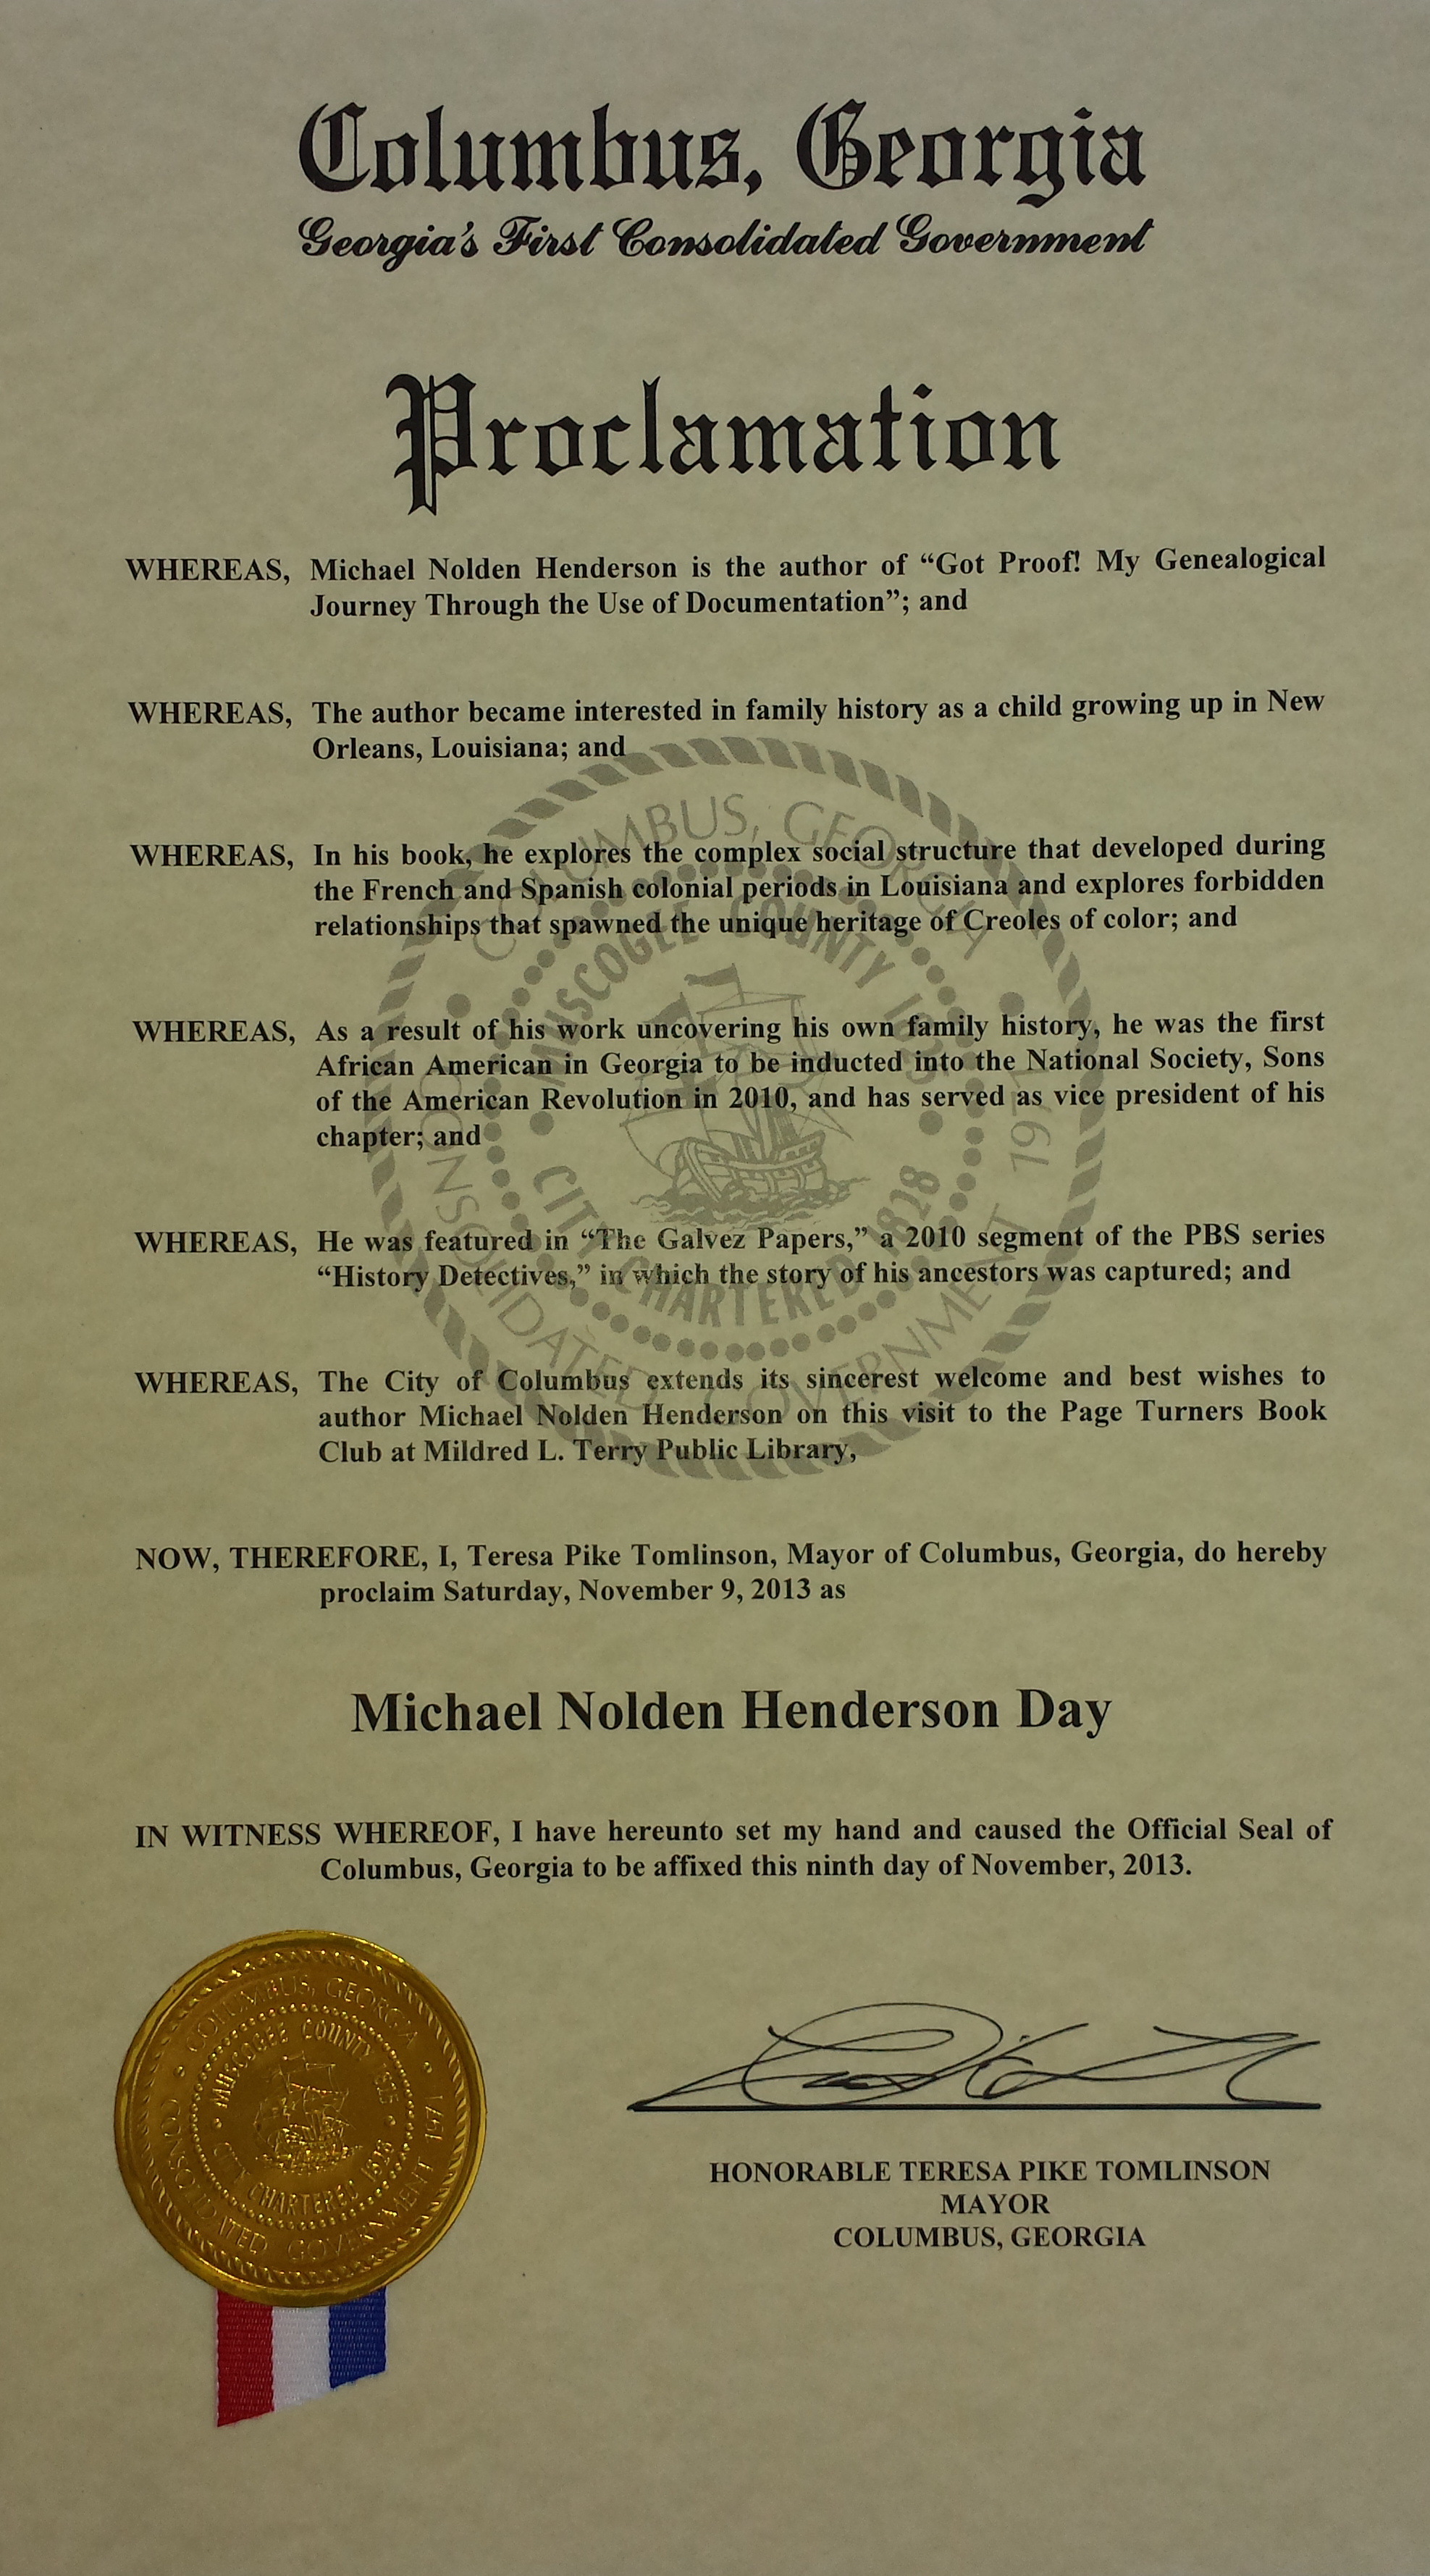 Columbus, Georgia Recognize Michael Nolden Henderson with a Proclamation November 9, 2013